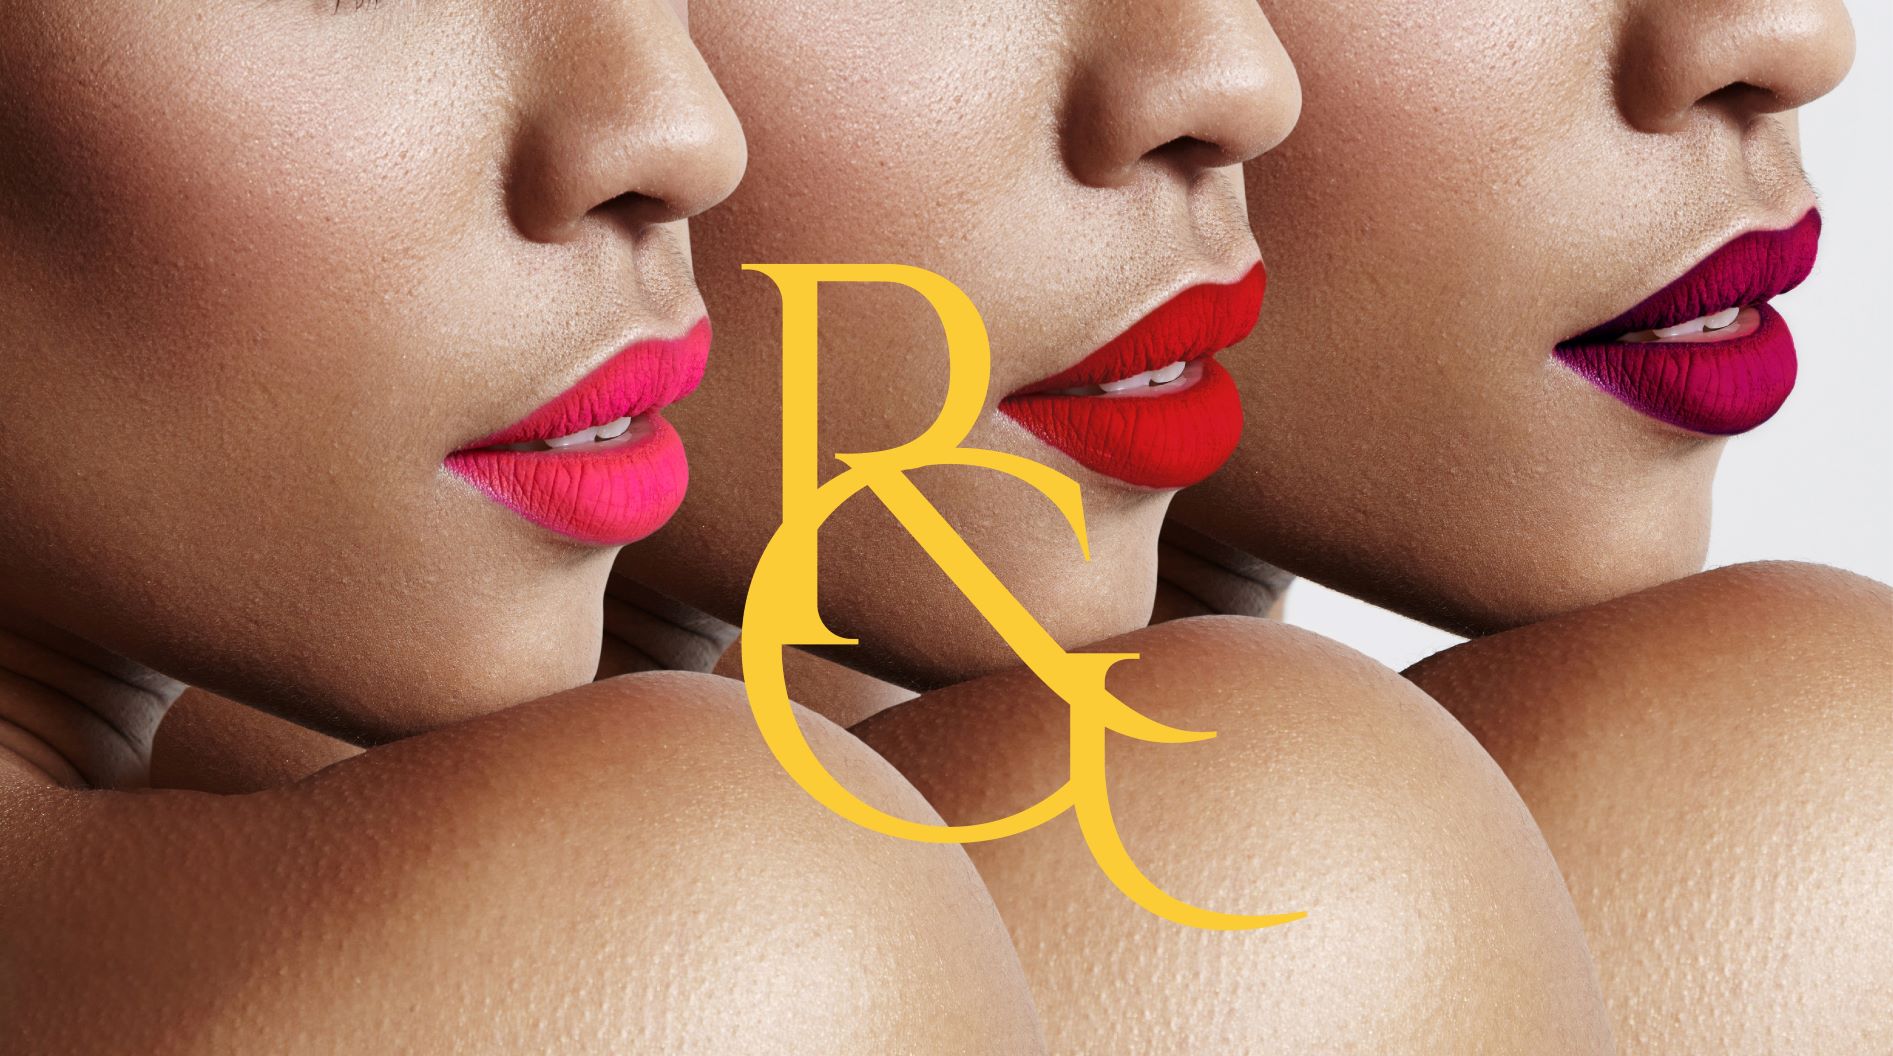 RG Lipstick ad